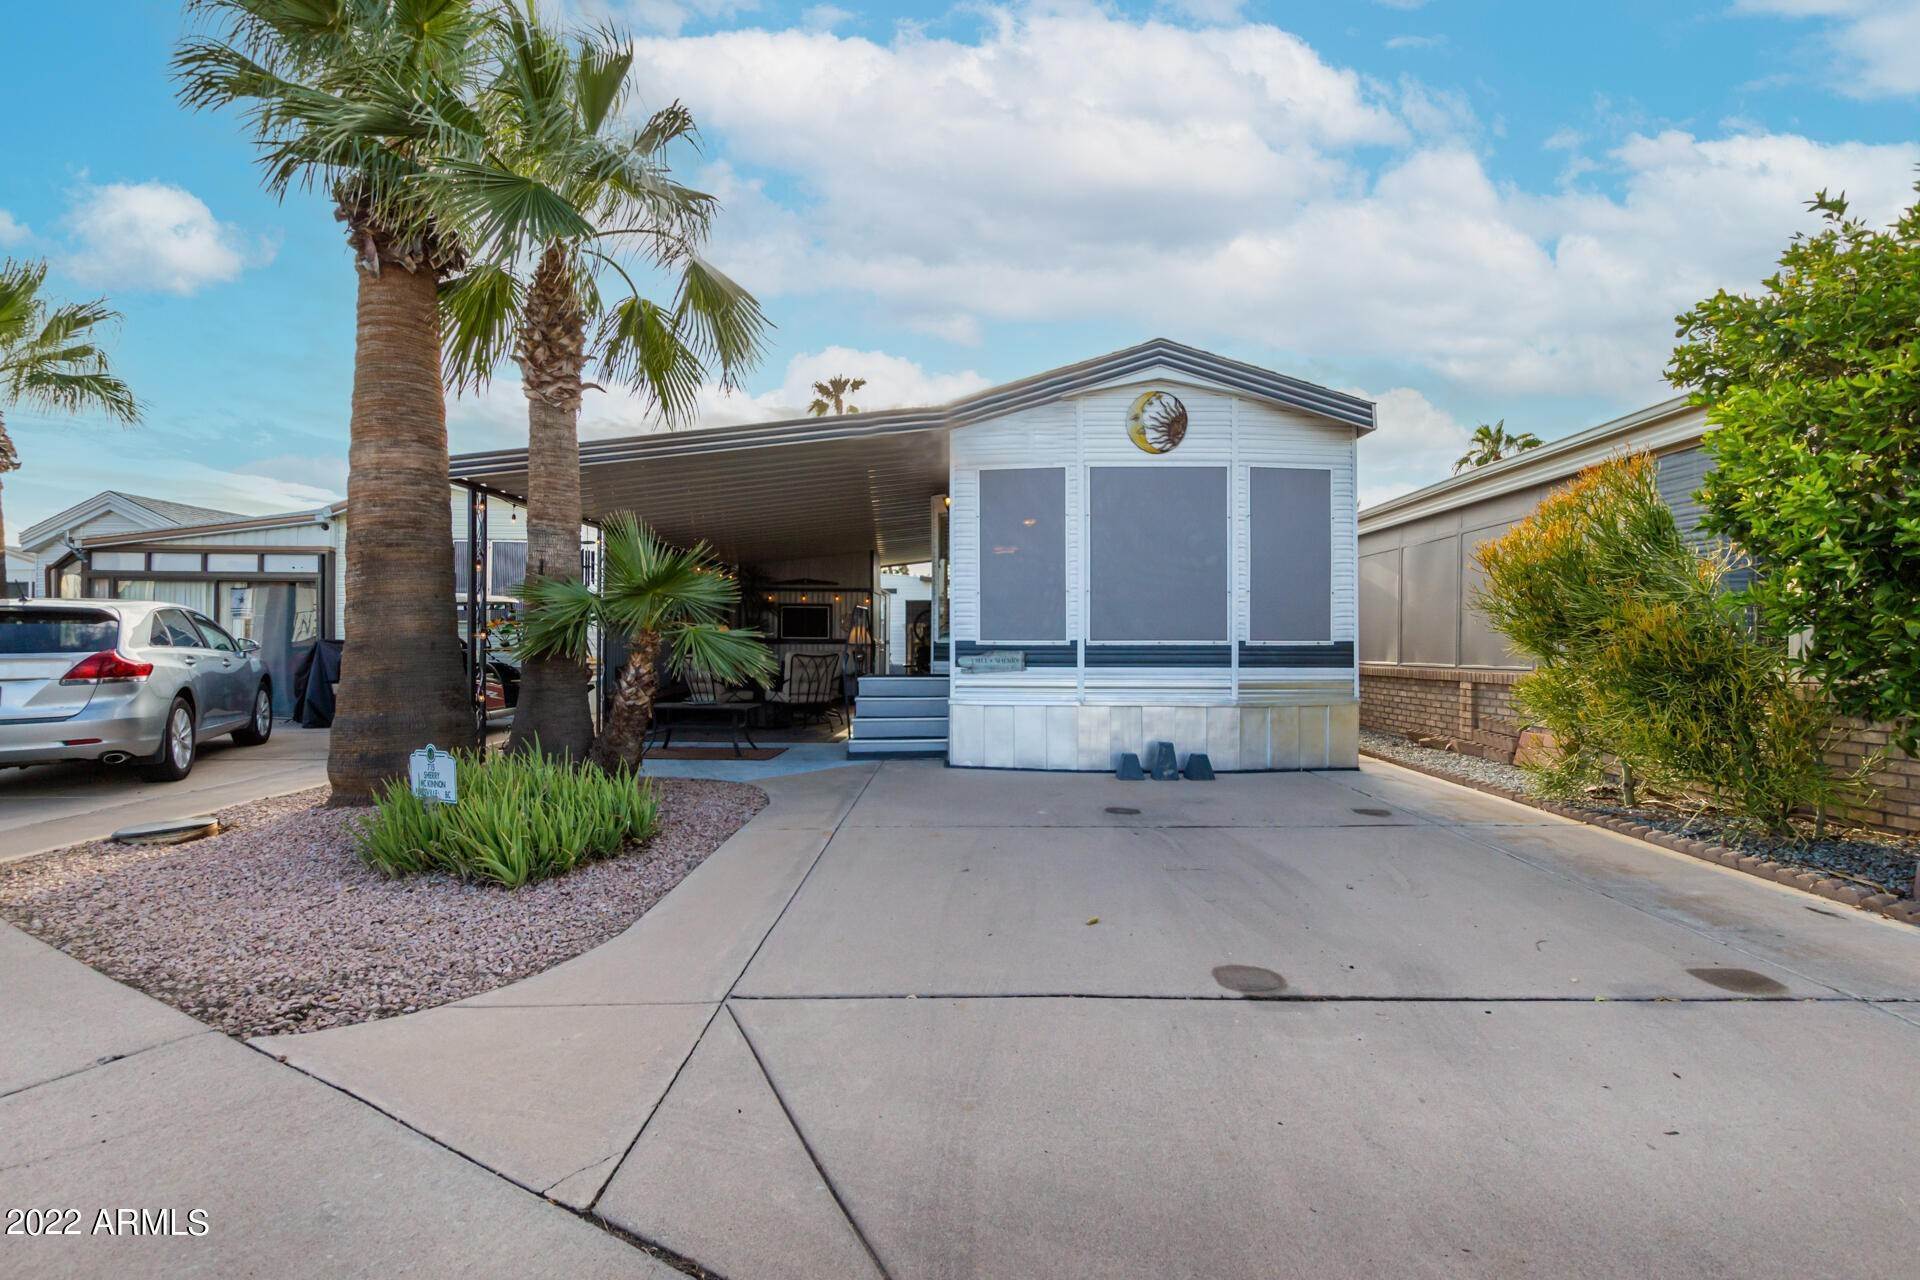 48. Mobile Home for Sale at Mesa, AZ 85205